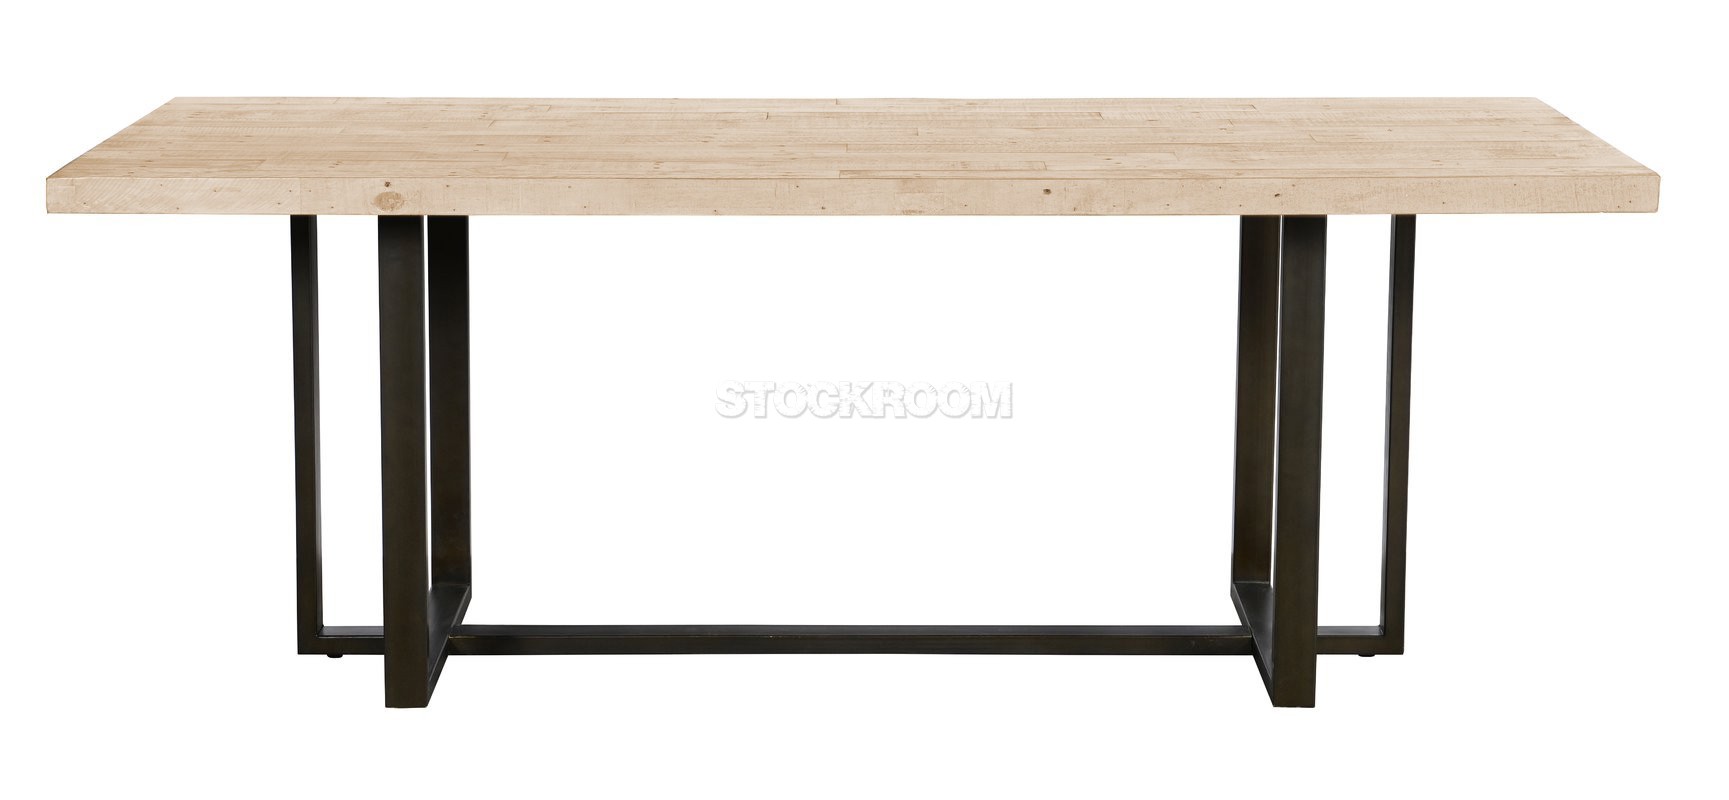 Kaiko Industrial style Table